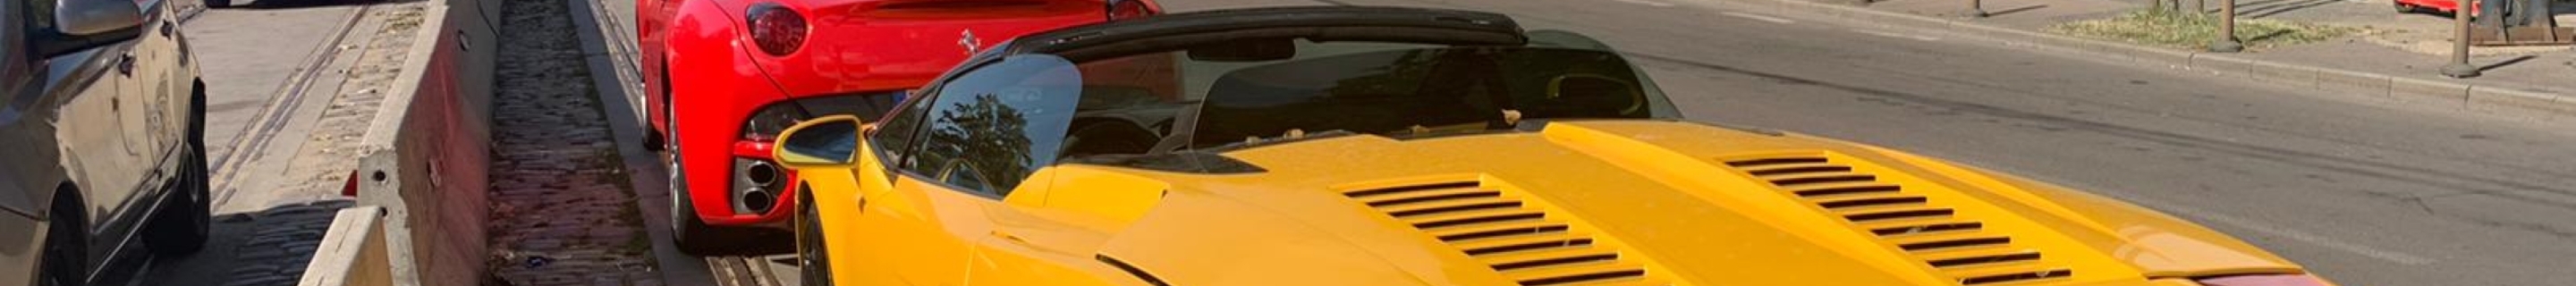 Lamborghini Gallardo Spyder